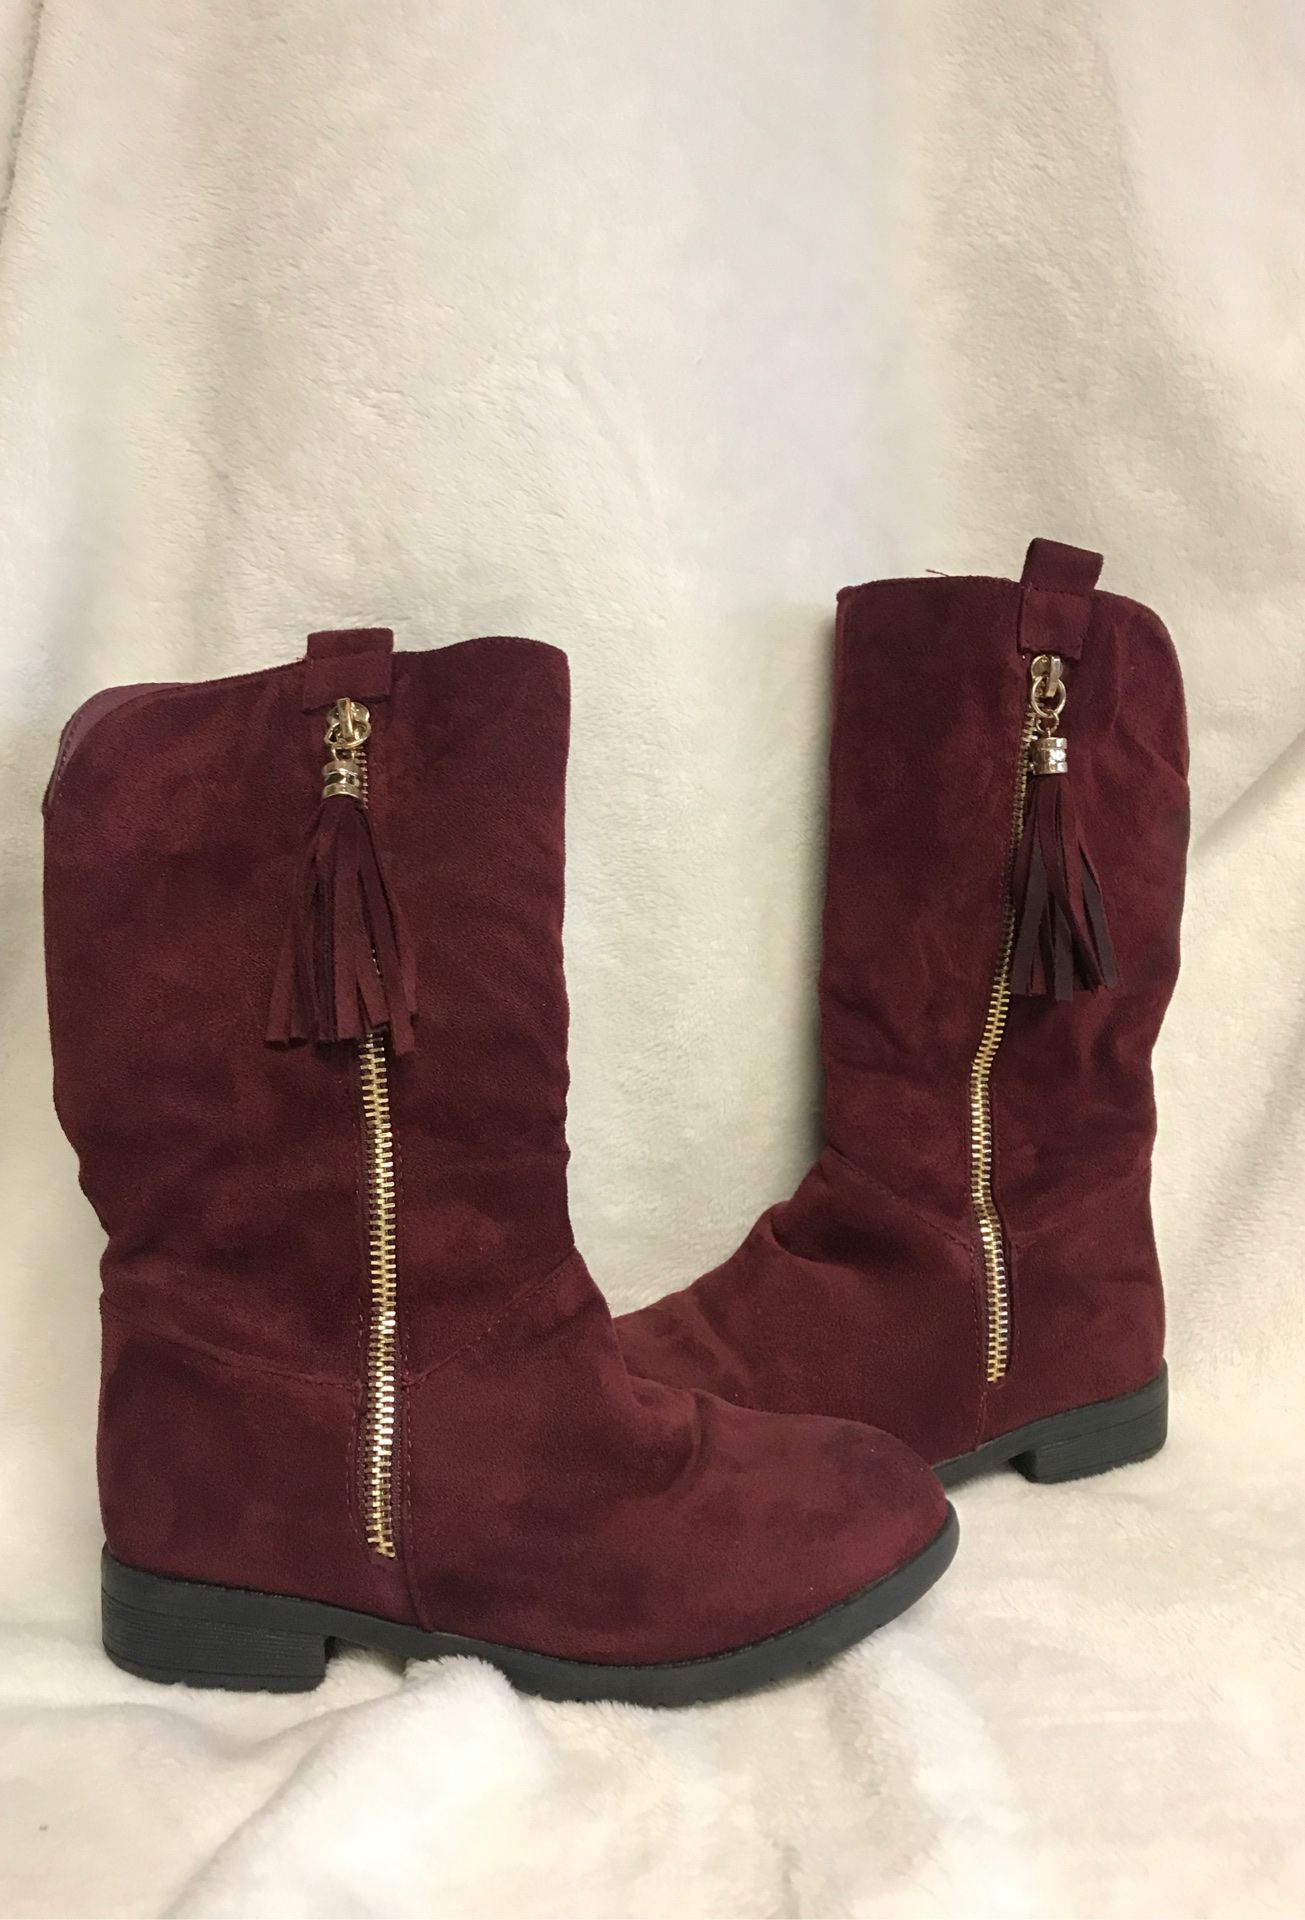 Beautiful burgundy boots girls size 13